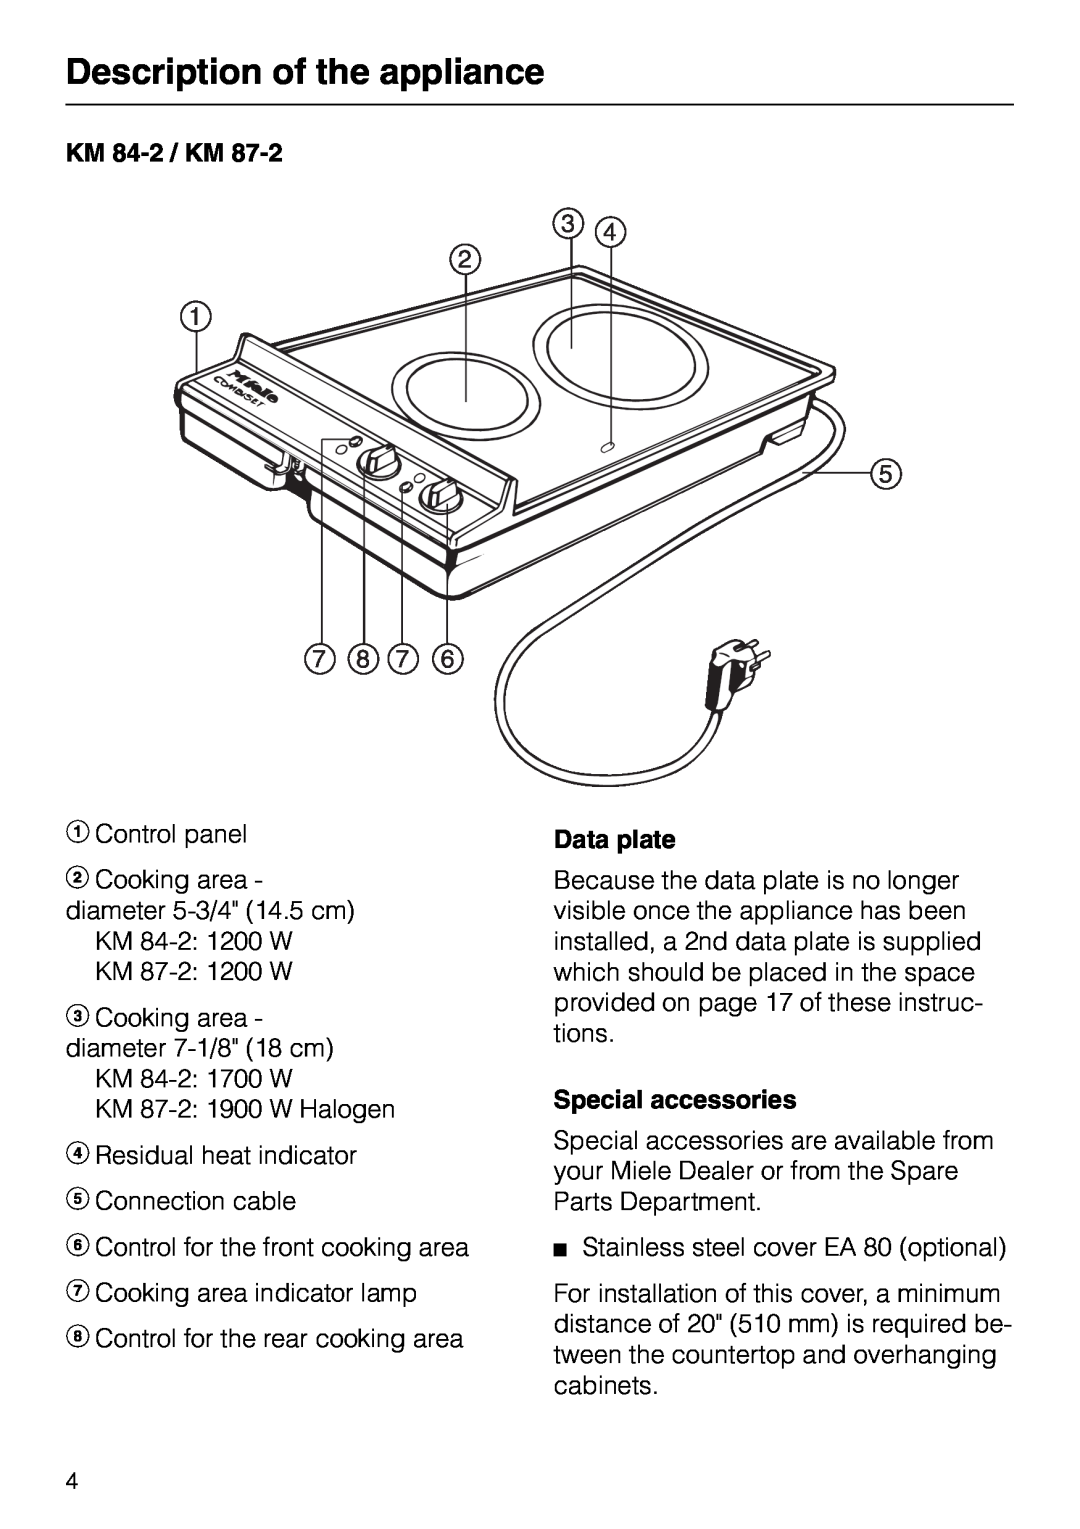 Miele KM84-2, KM 87-2 manual Description of the appliance, KM 84-2 / KM, Data plate, Special accessories 